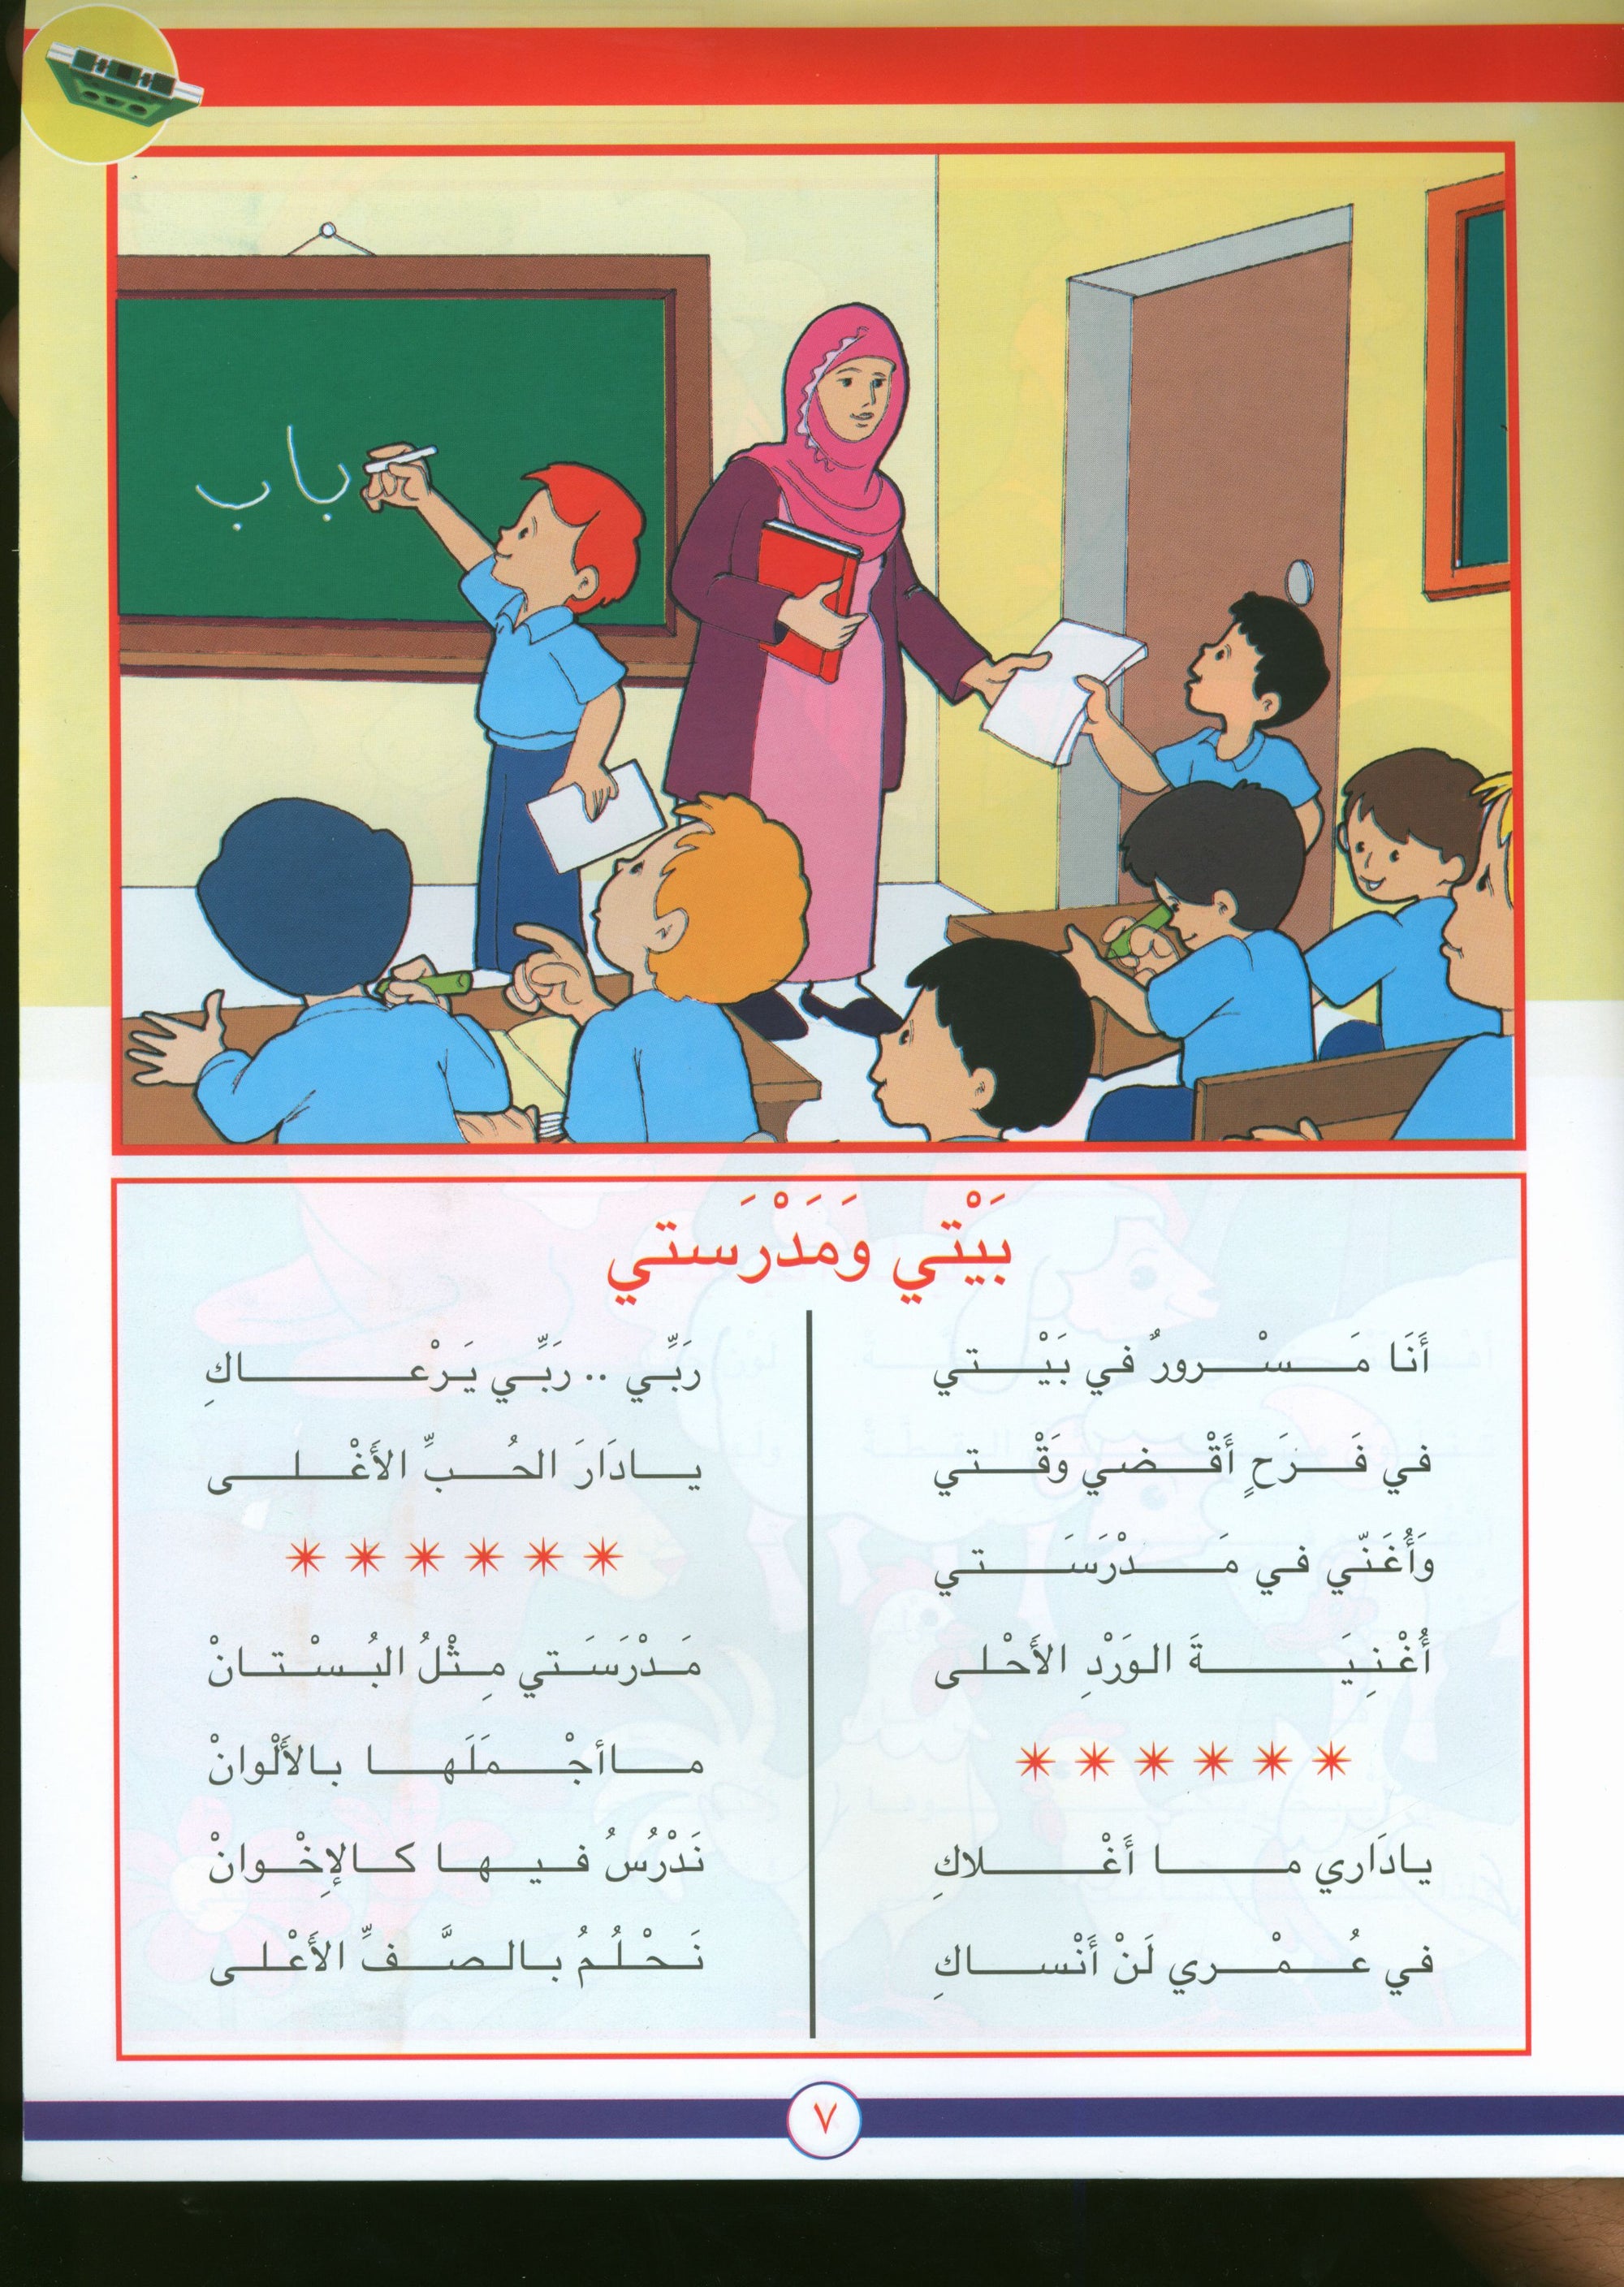 Hurry to Arabic Language PreK 1 هيا الى العربية بستان